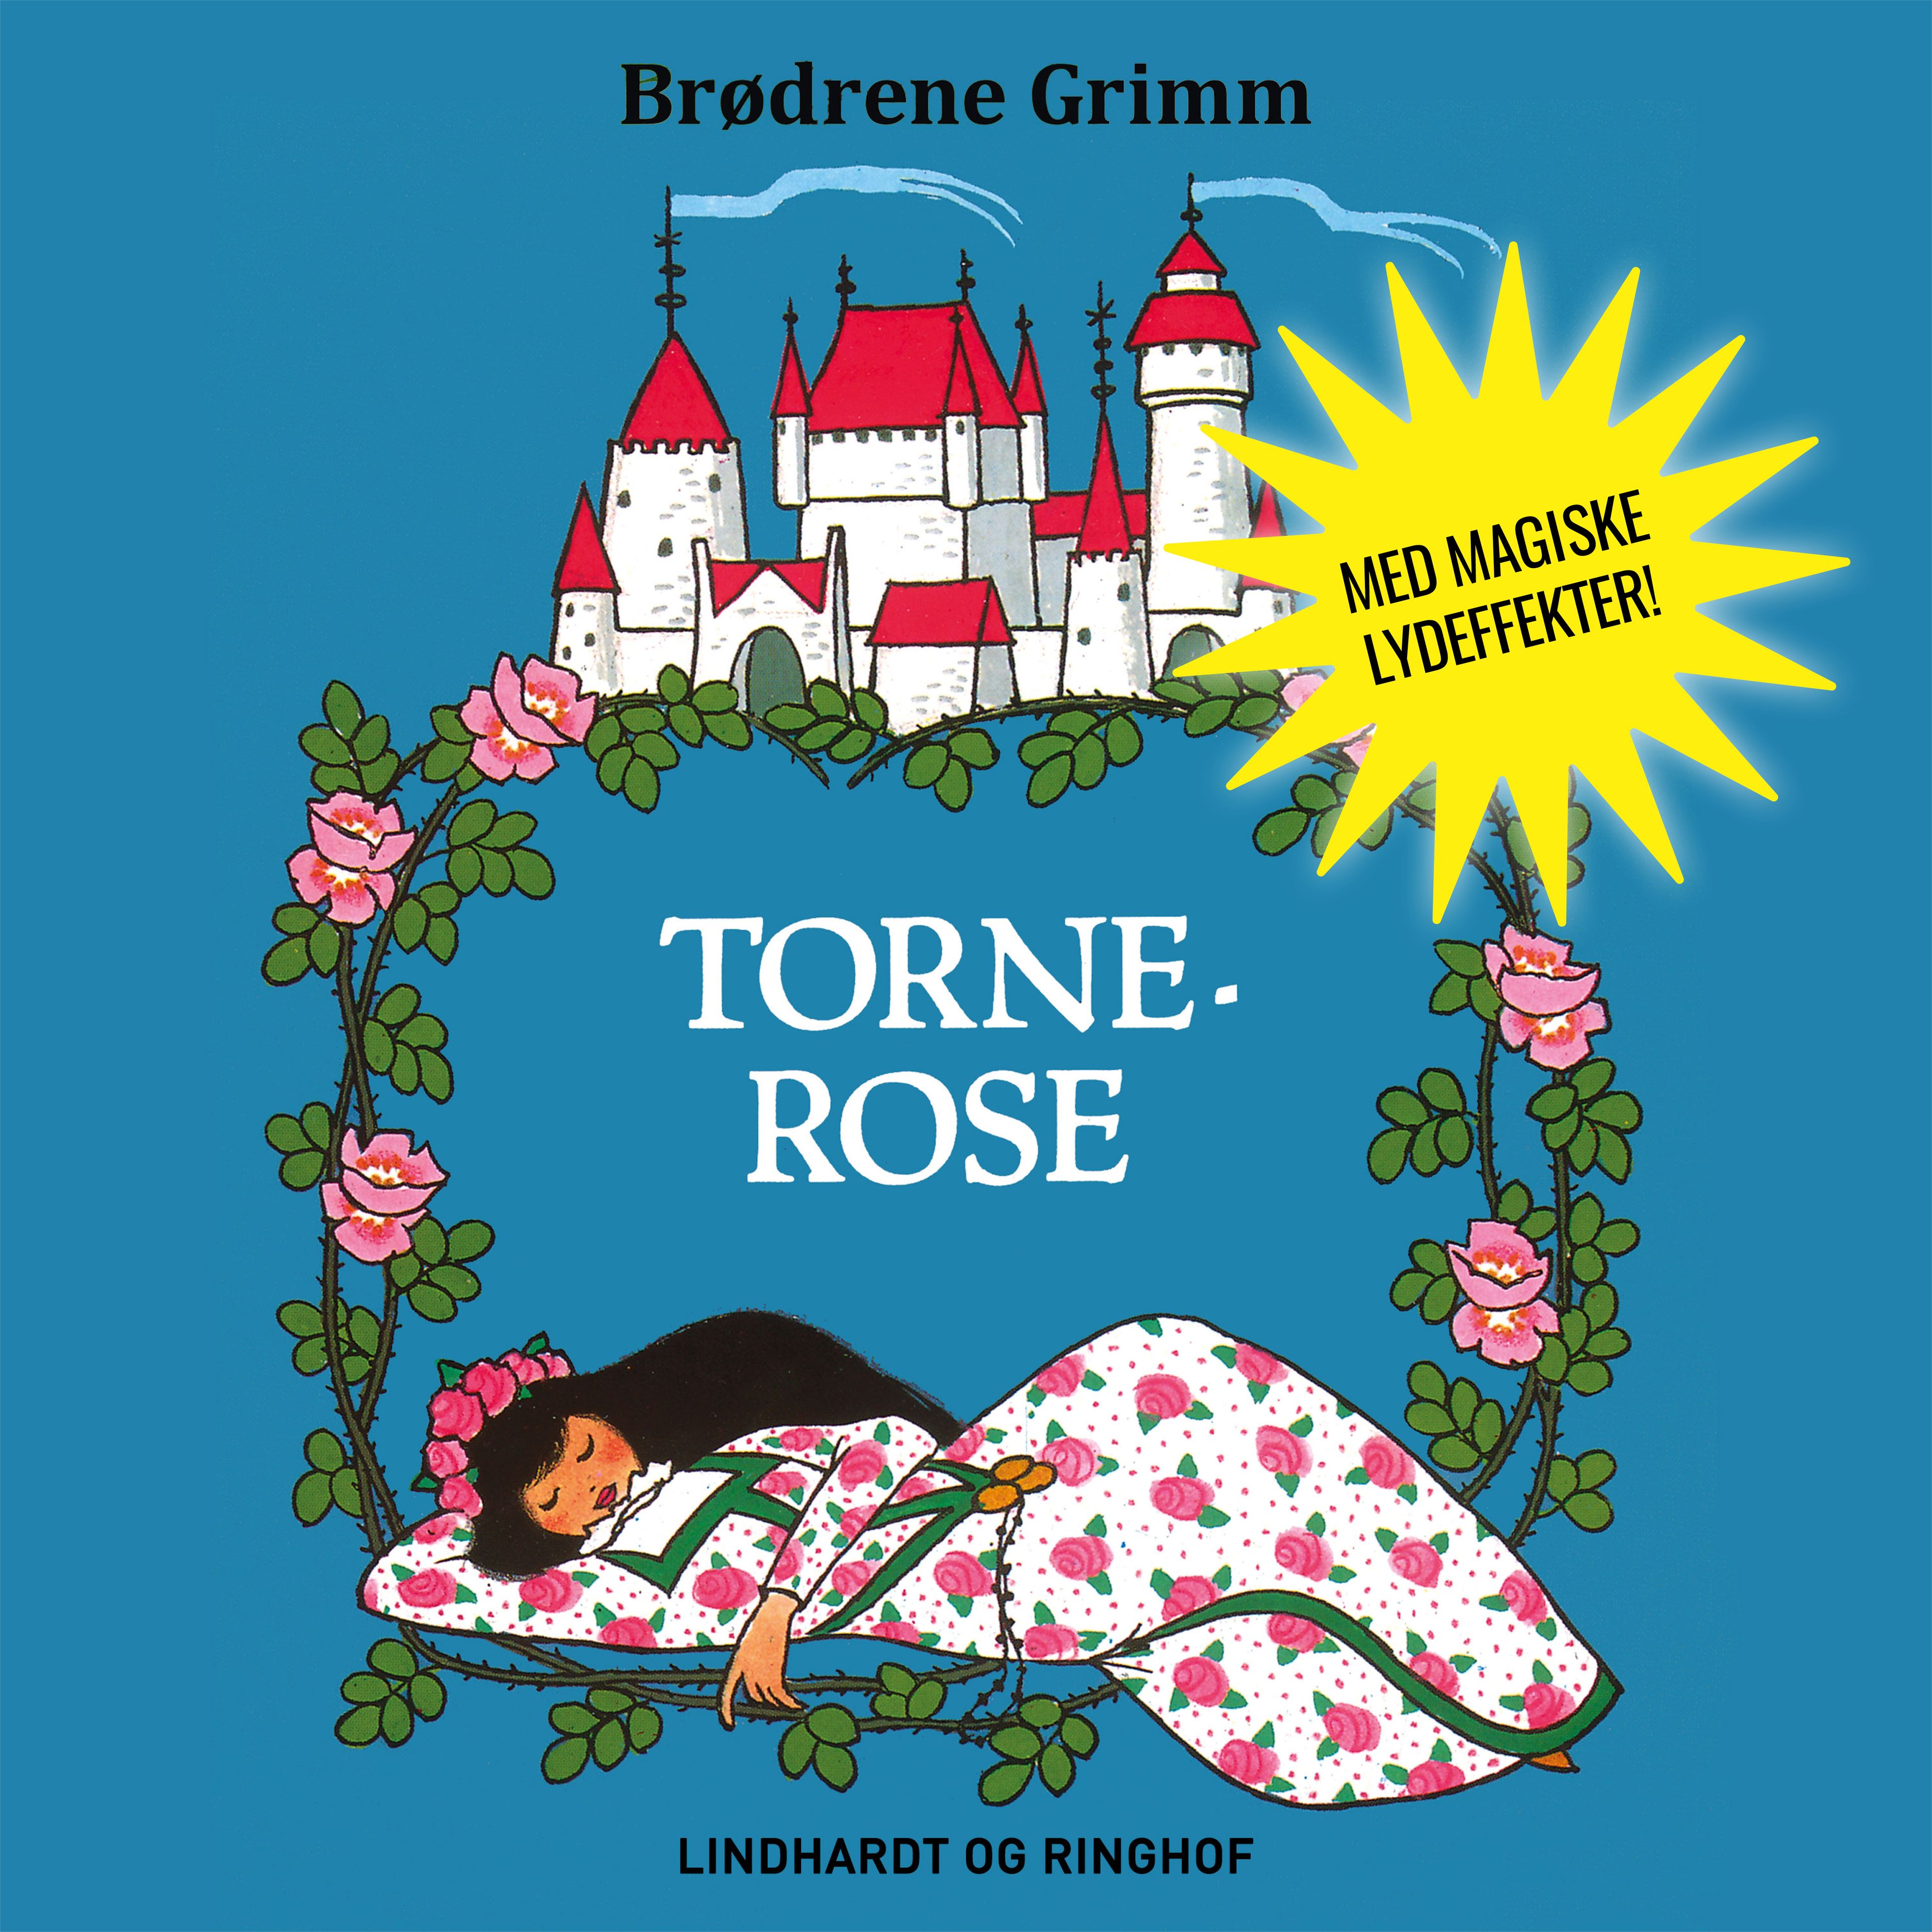 Tornerose - Lydbogsdrama, audiobook by Bdr. Grimm. M.fl